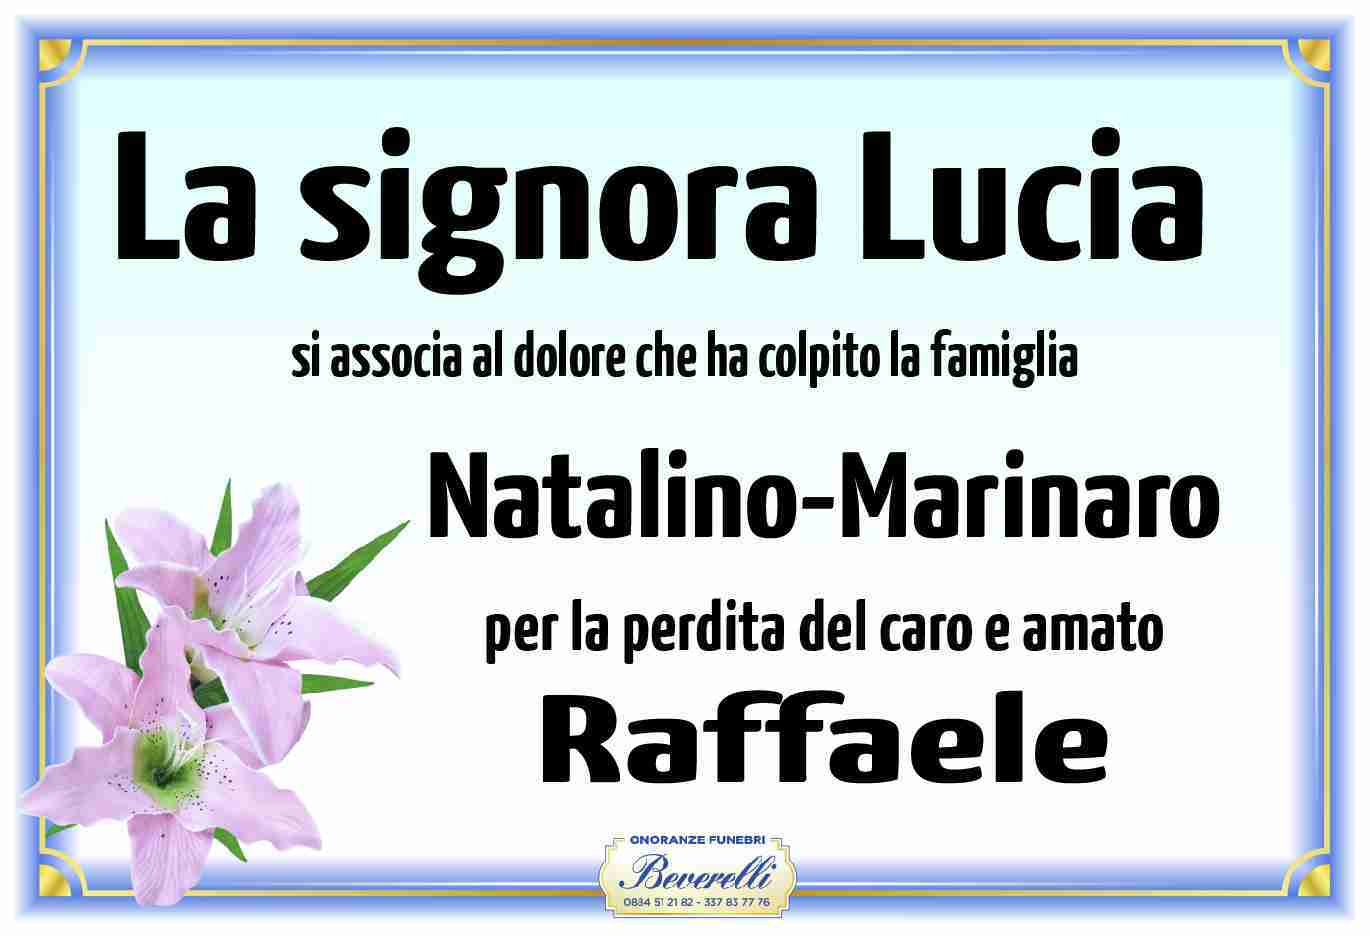 Raffaele Natalino